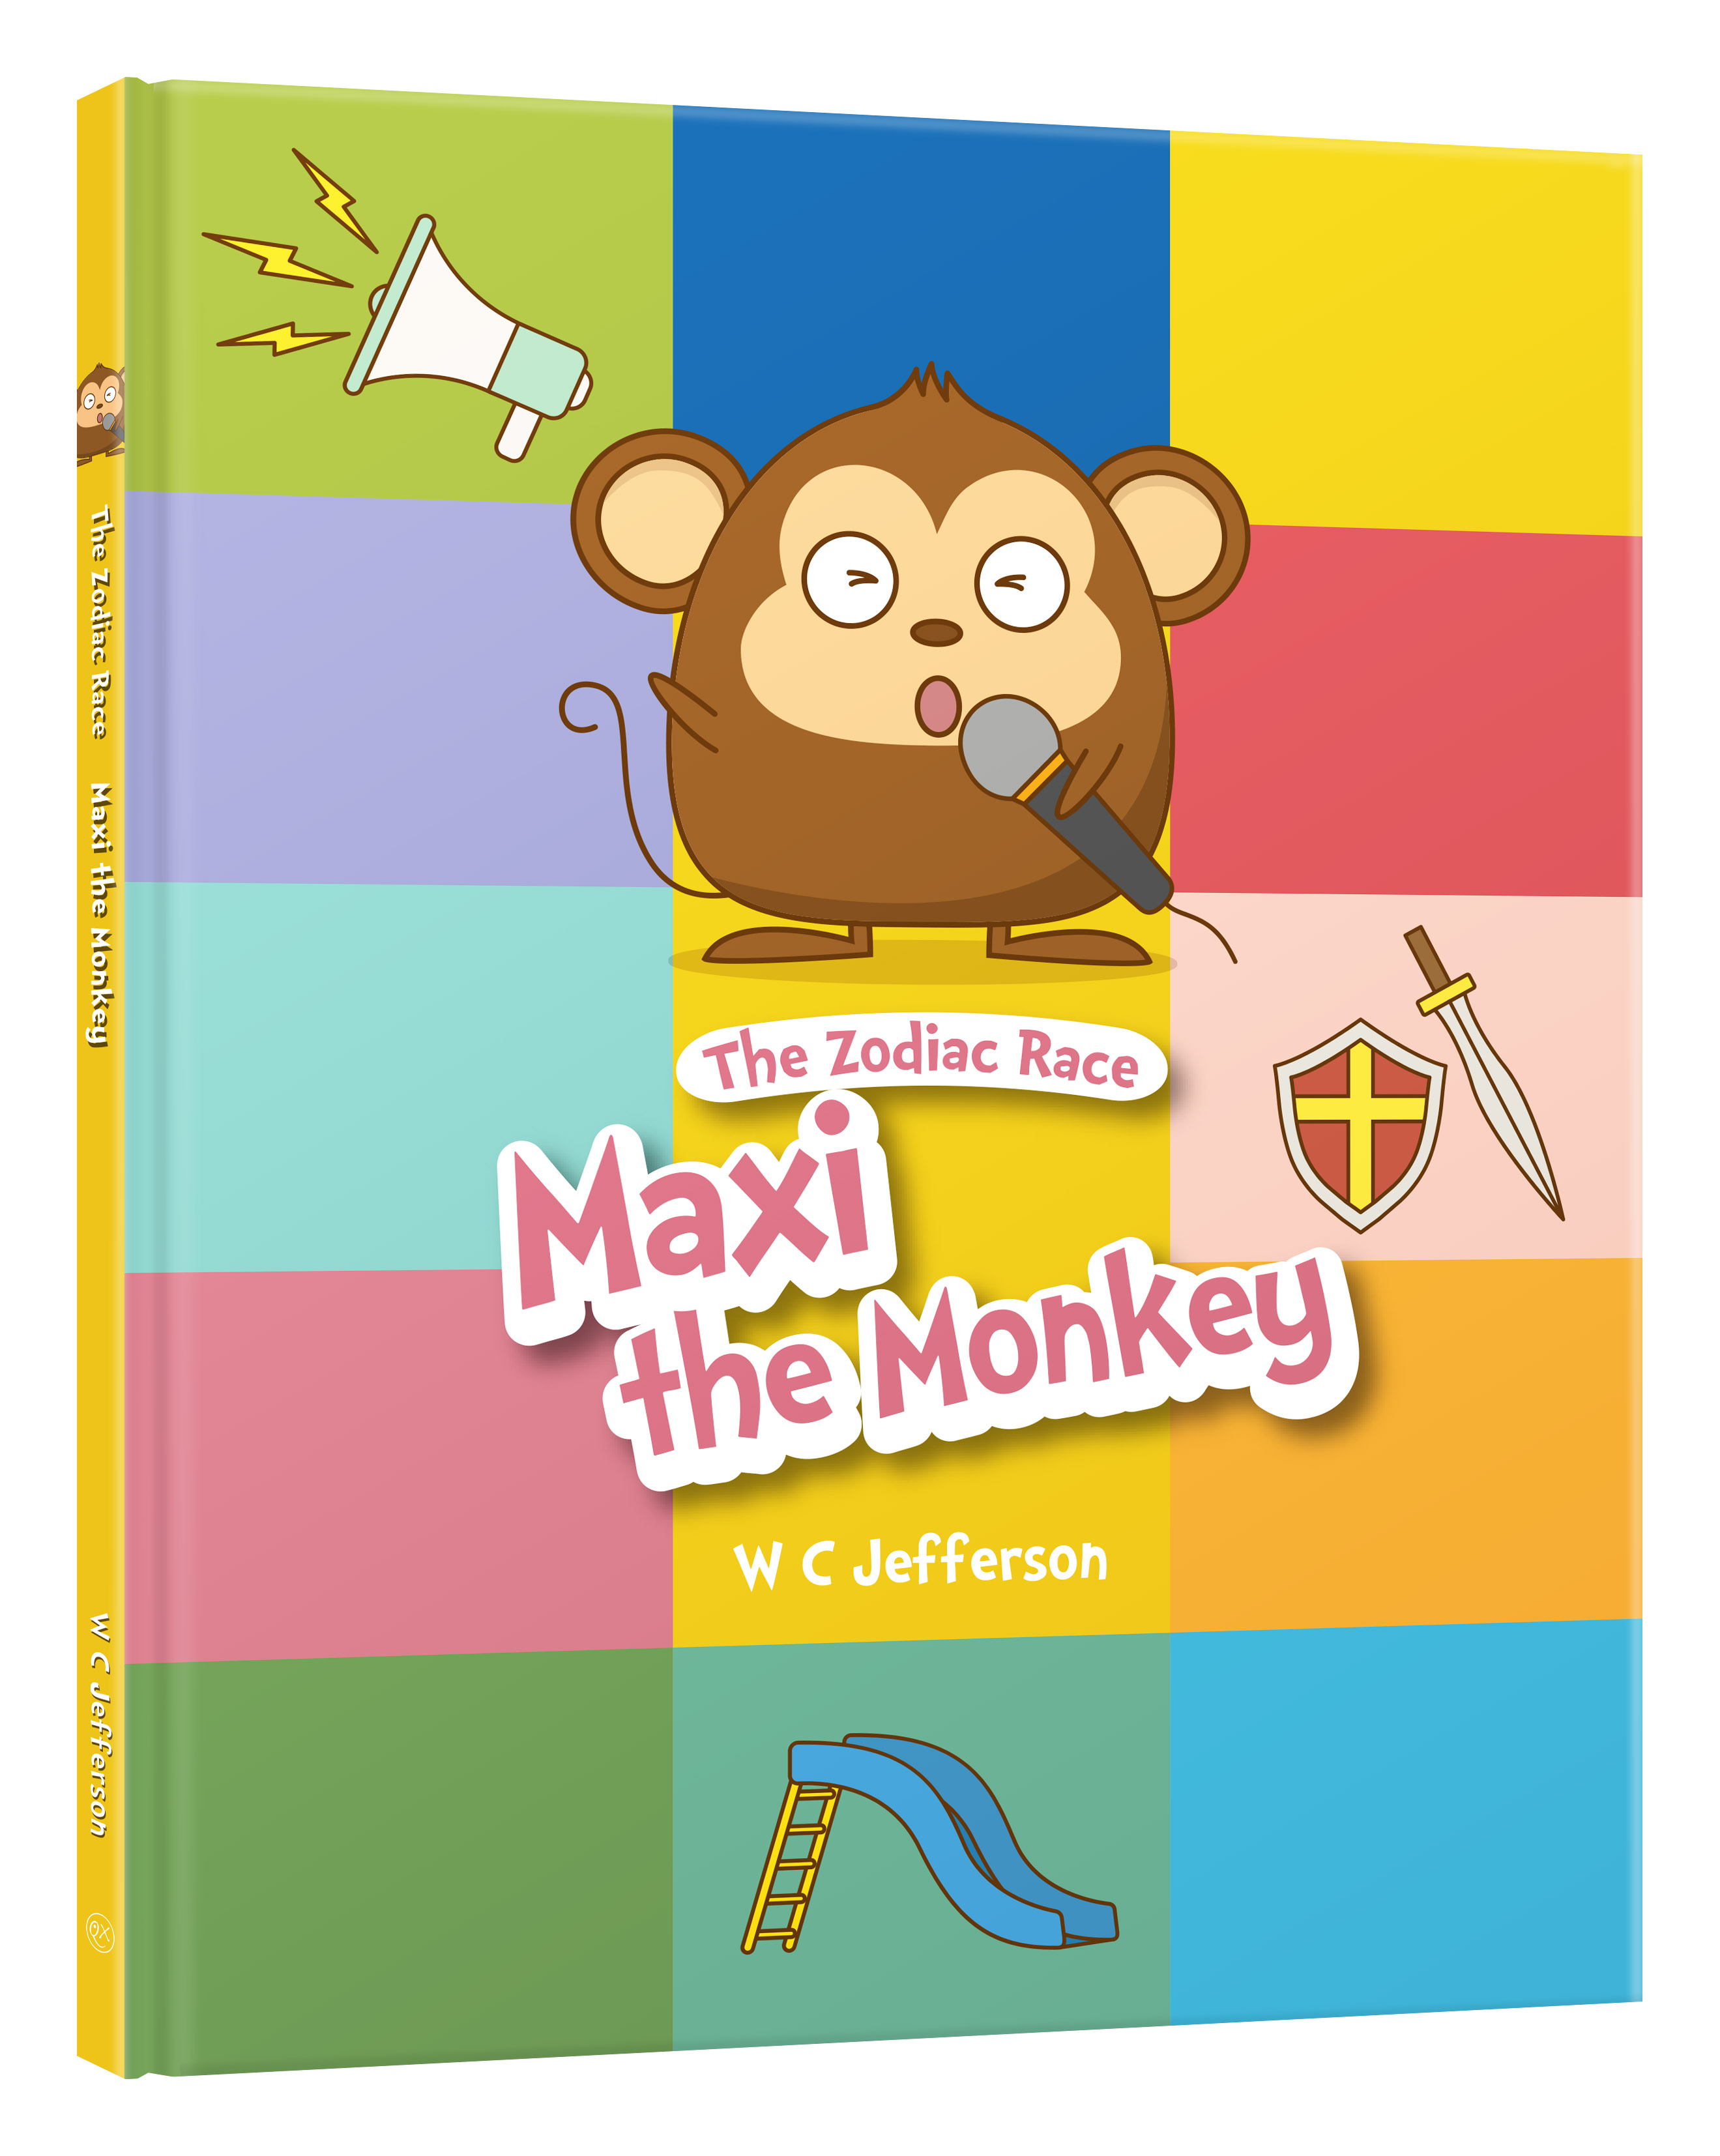 The Zodiac Race: Maxi the Monkey